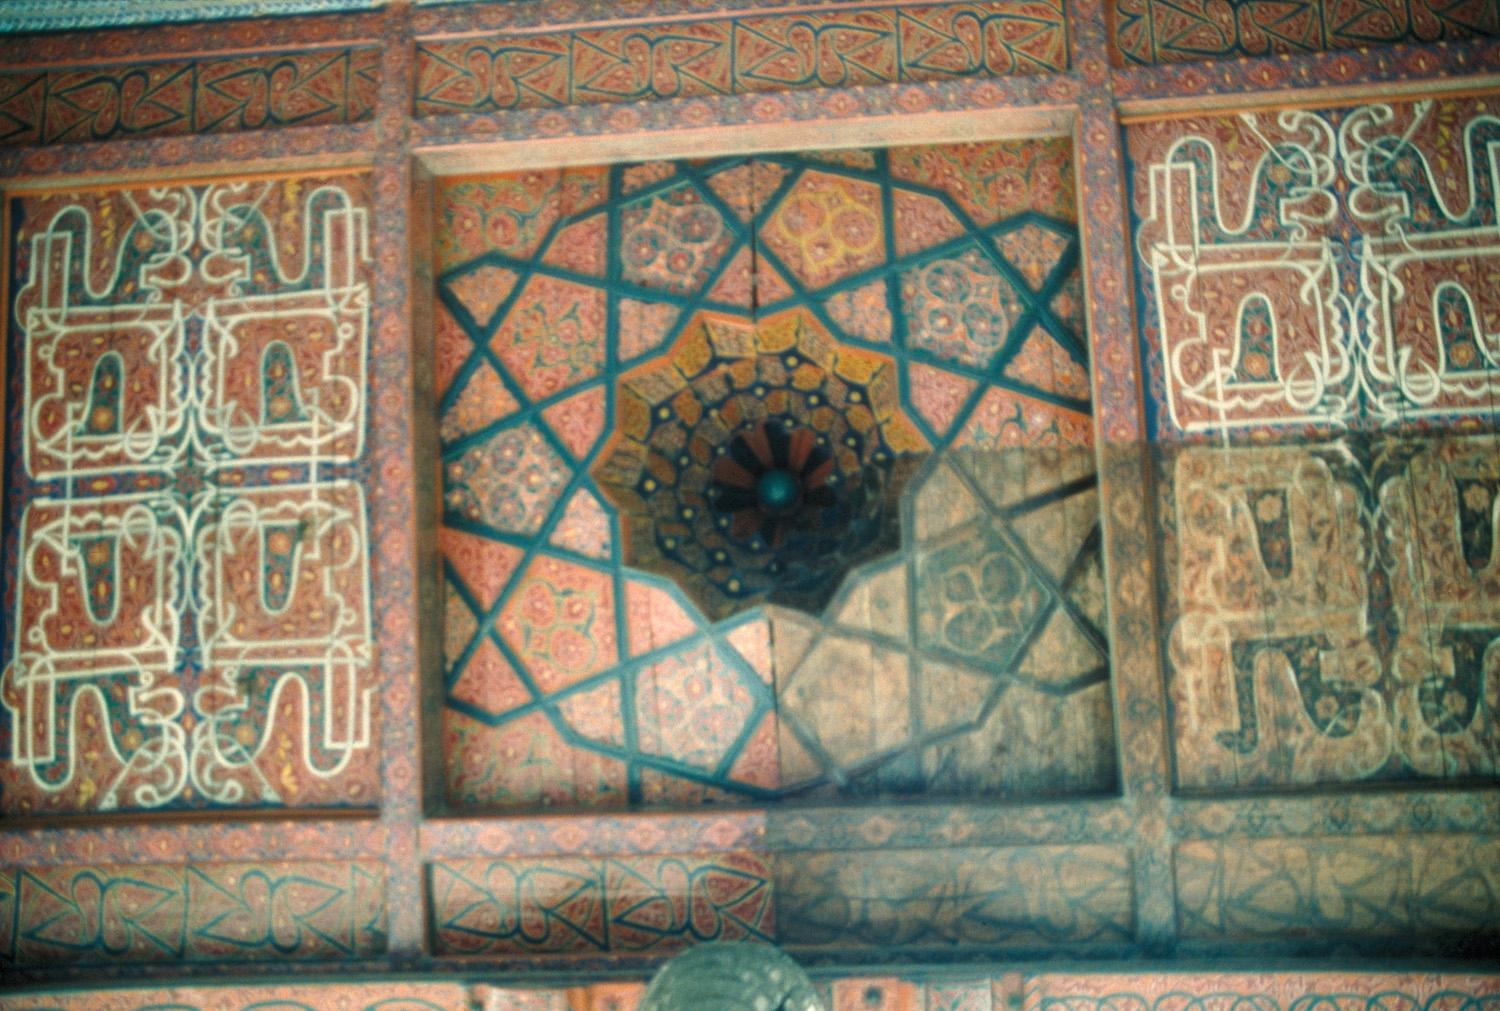 Interior detail of ceiling decoration